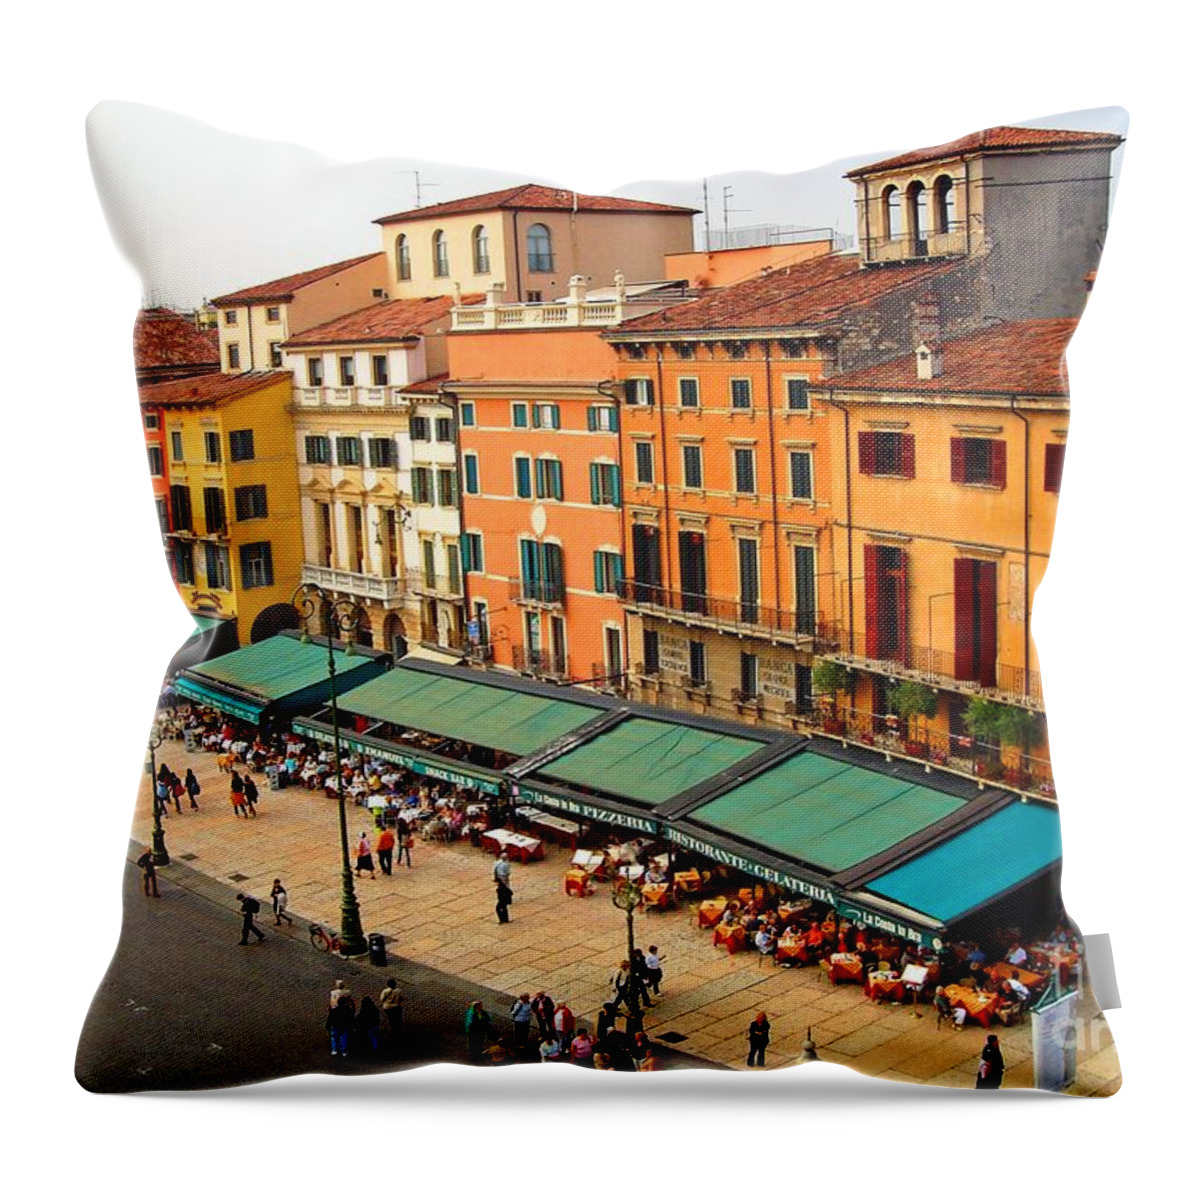 Ristorante Throw Pillow featuring the photograph Ristorante Olivo Sas Piazza Bra by Phillip Allen